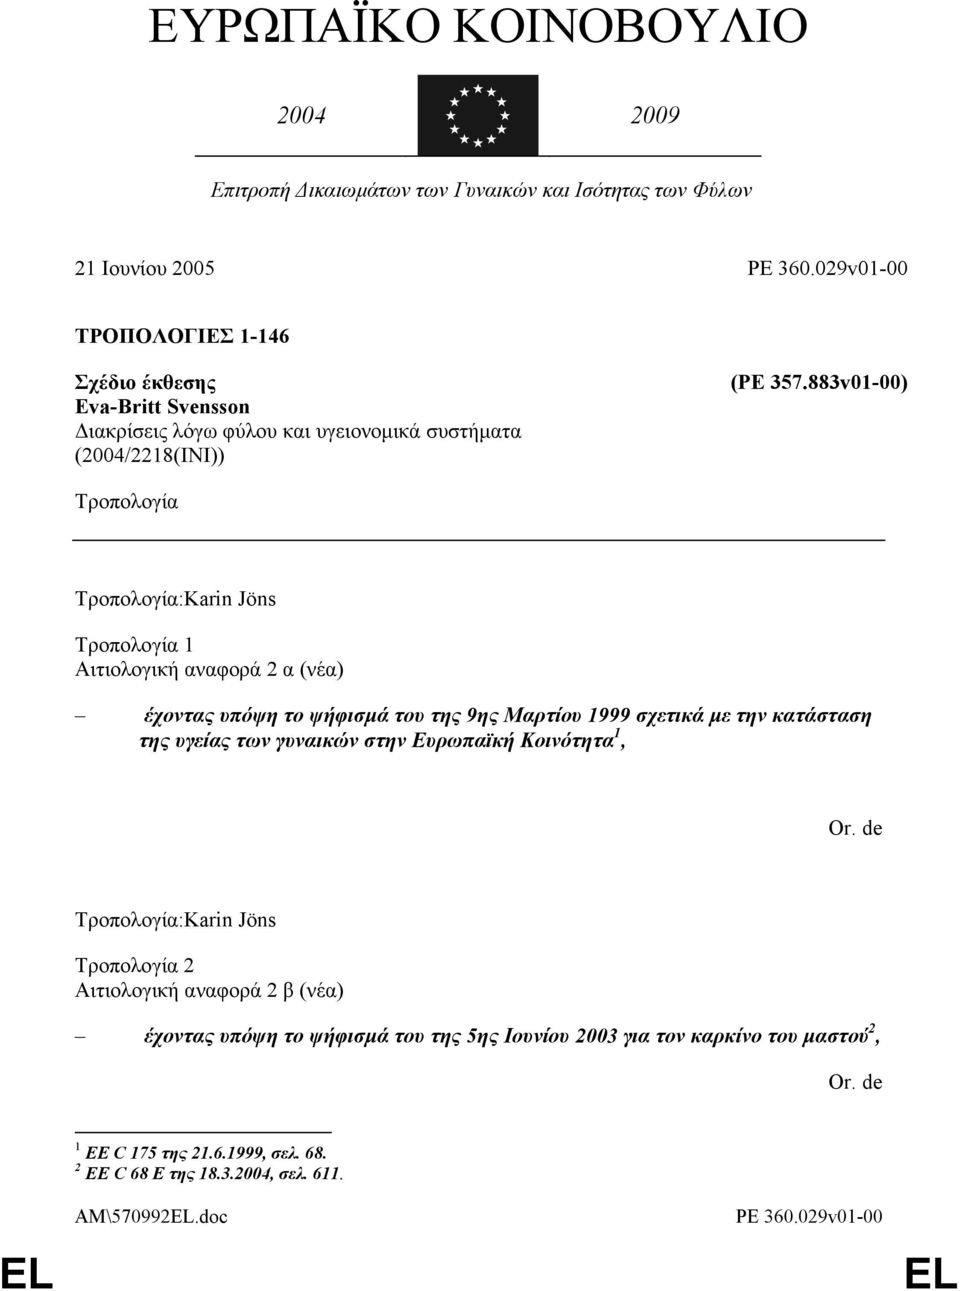 883v01-00) Τροπολογία Τροπολογία:Karin Jöns Τροπολογία 1 Αιτιολογική αναφορά 2 α (νέα) έχοντας υπόψη το ψήφισμά του της 9ης Μαρτίου 1999 σχετικά με την κατάσταση της υγείας των